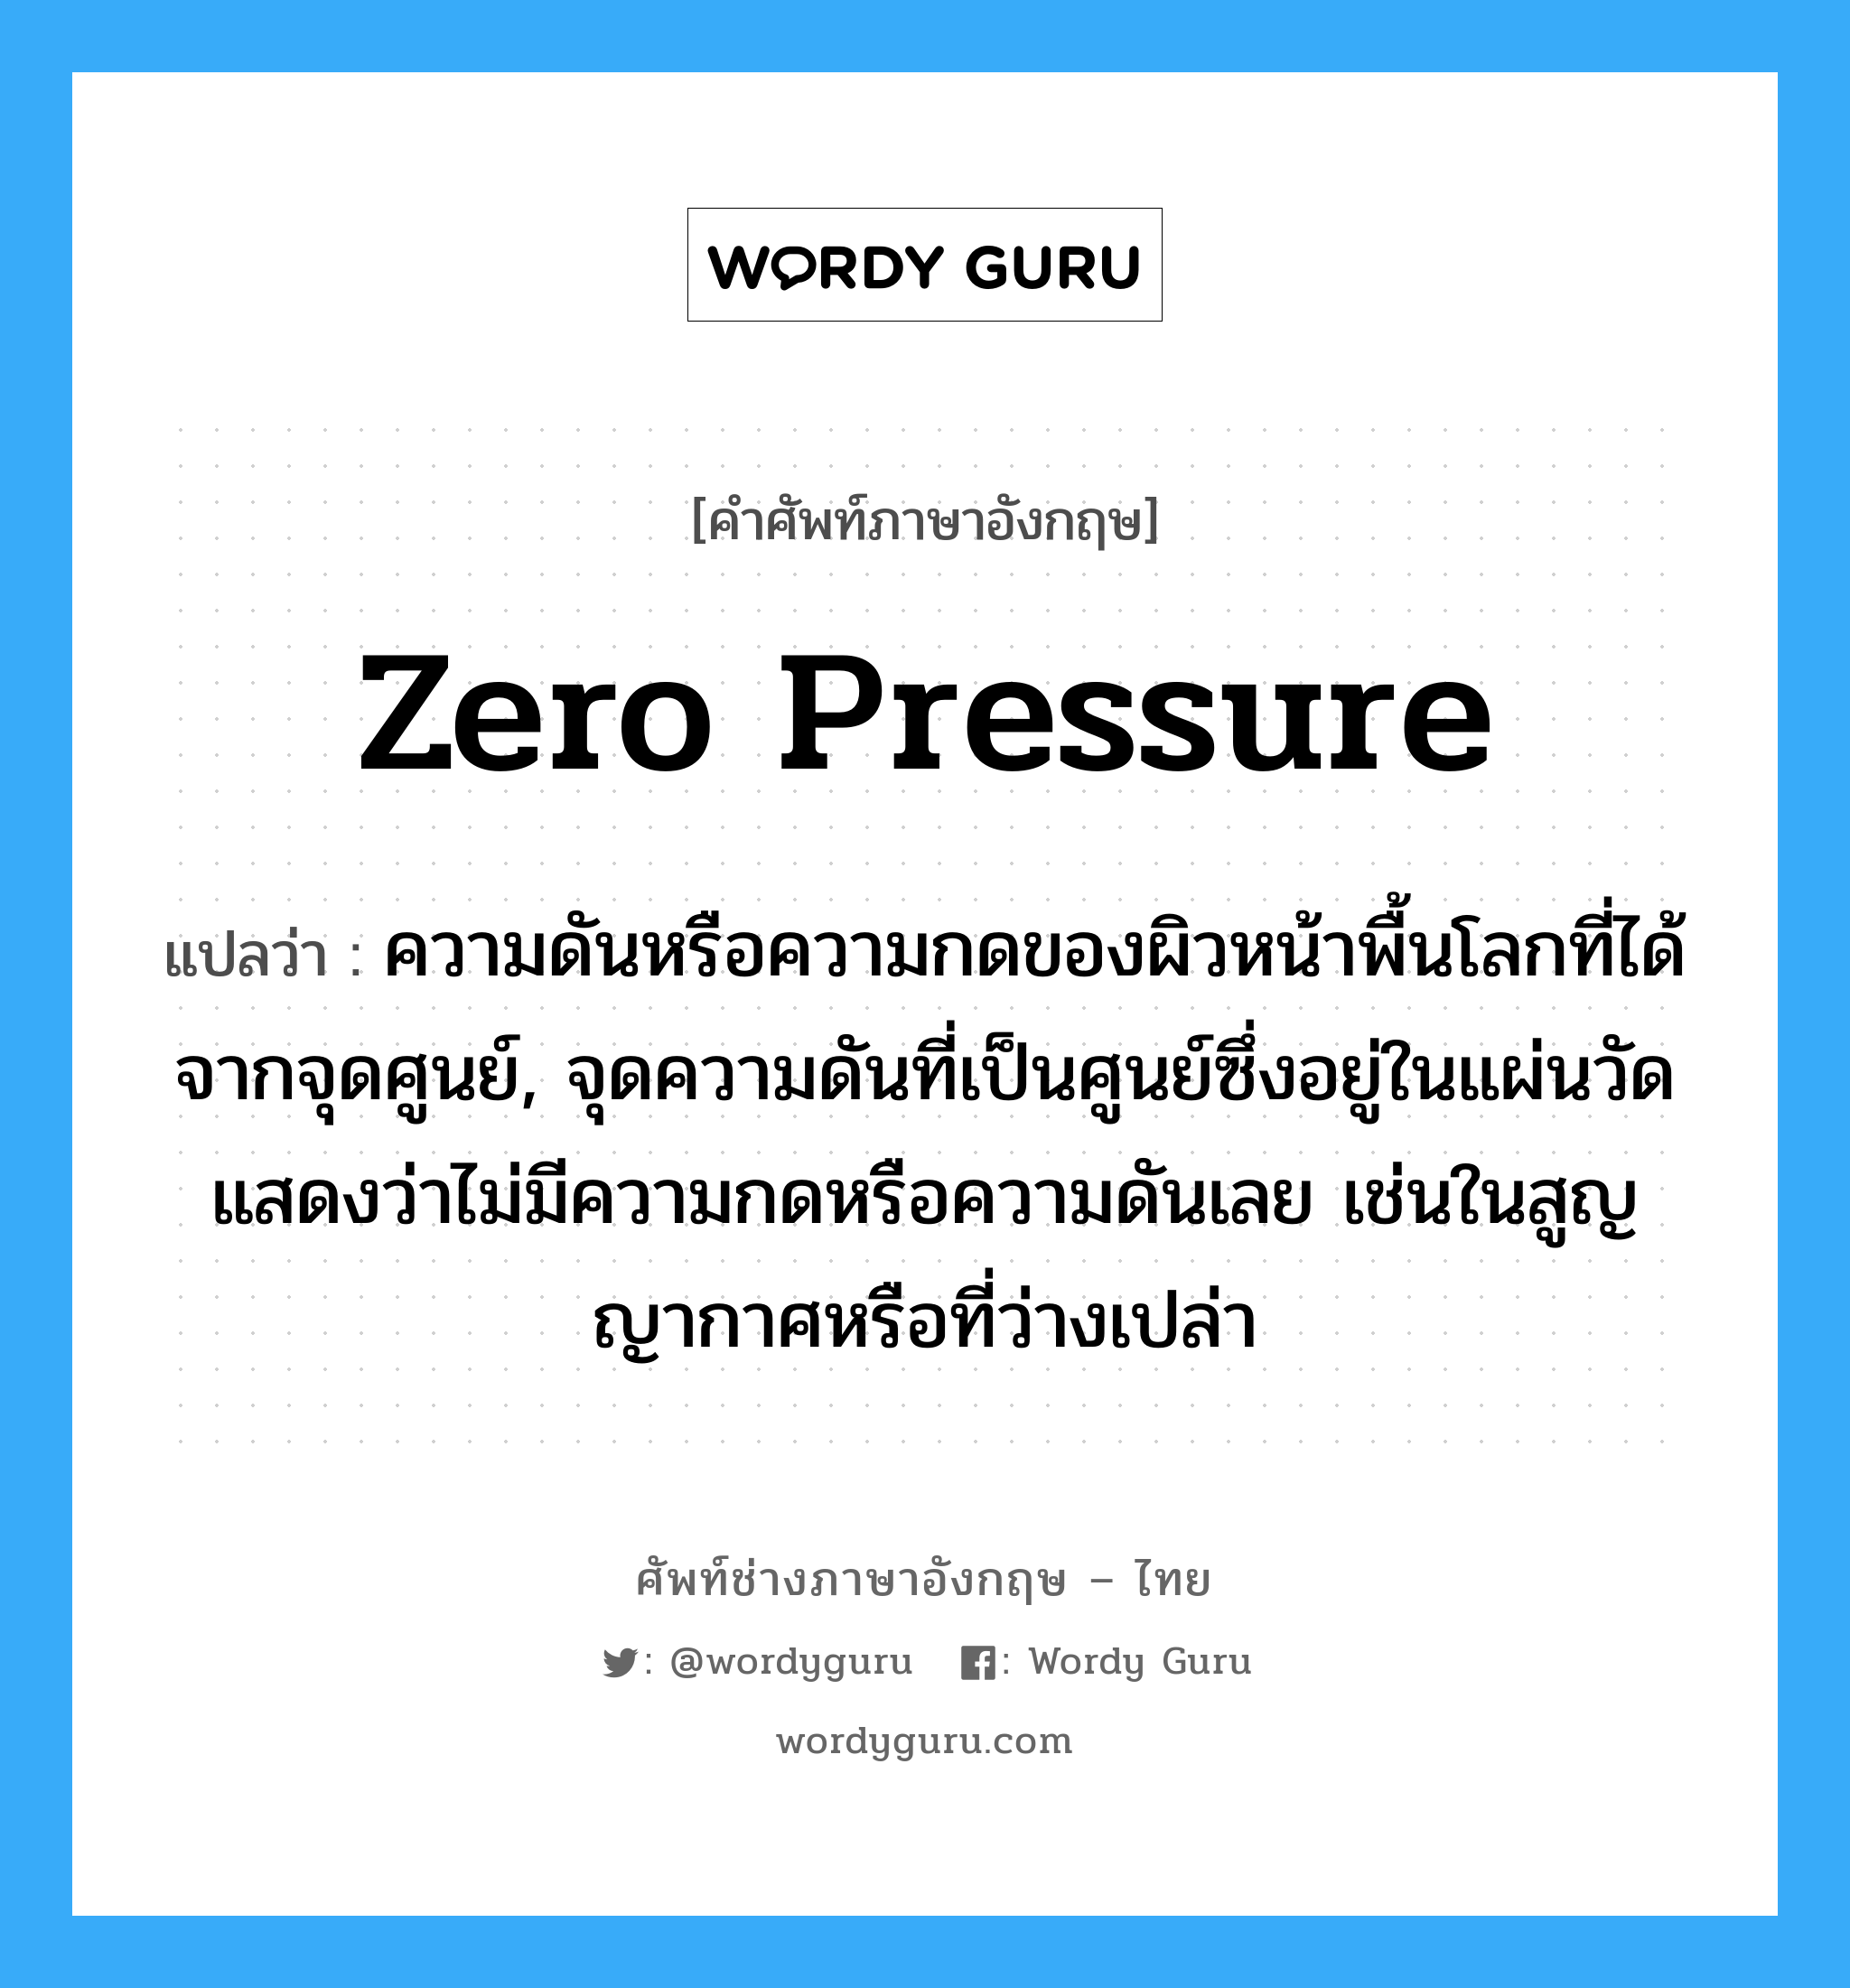 zero pressure แปลว่า?, คำศัพท์ช่างภาษาอังกฤษ - ไทย zero pressure คำศัพท์ภาษาอังกฤษ zero pressure แปลว่า ความดันหรือความกดของผิวหน้าพื้นโลกที่ได้จากจุดศูนย์, จุดความดันที่เป็นศูนย์ซึ่งอยู่ในแผ่นวัด แสดงว่าไม่มีความกดหรือความดันเลย เช่นในสูญญากาศหรือที่ว่างเปล่า